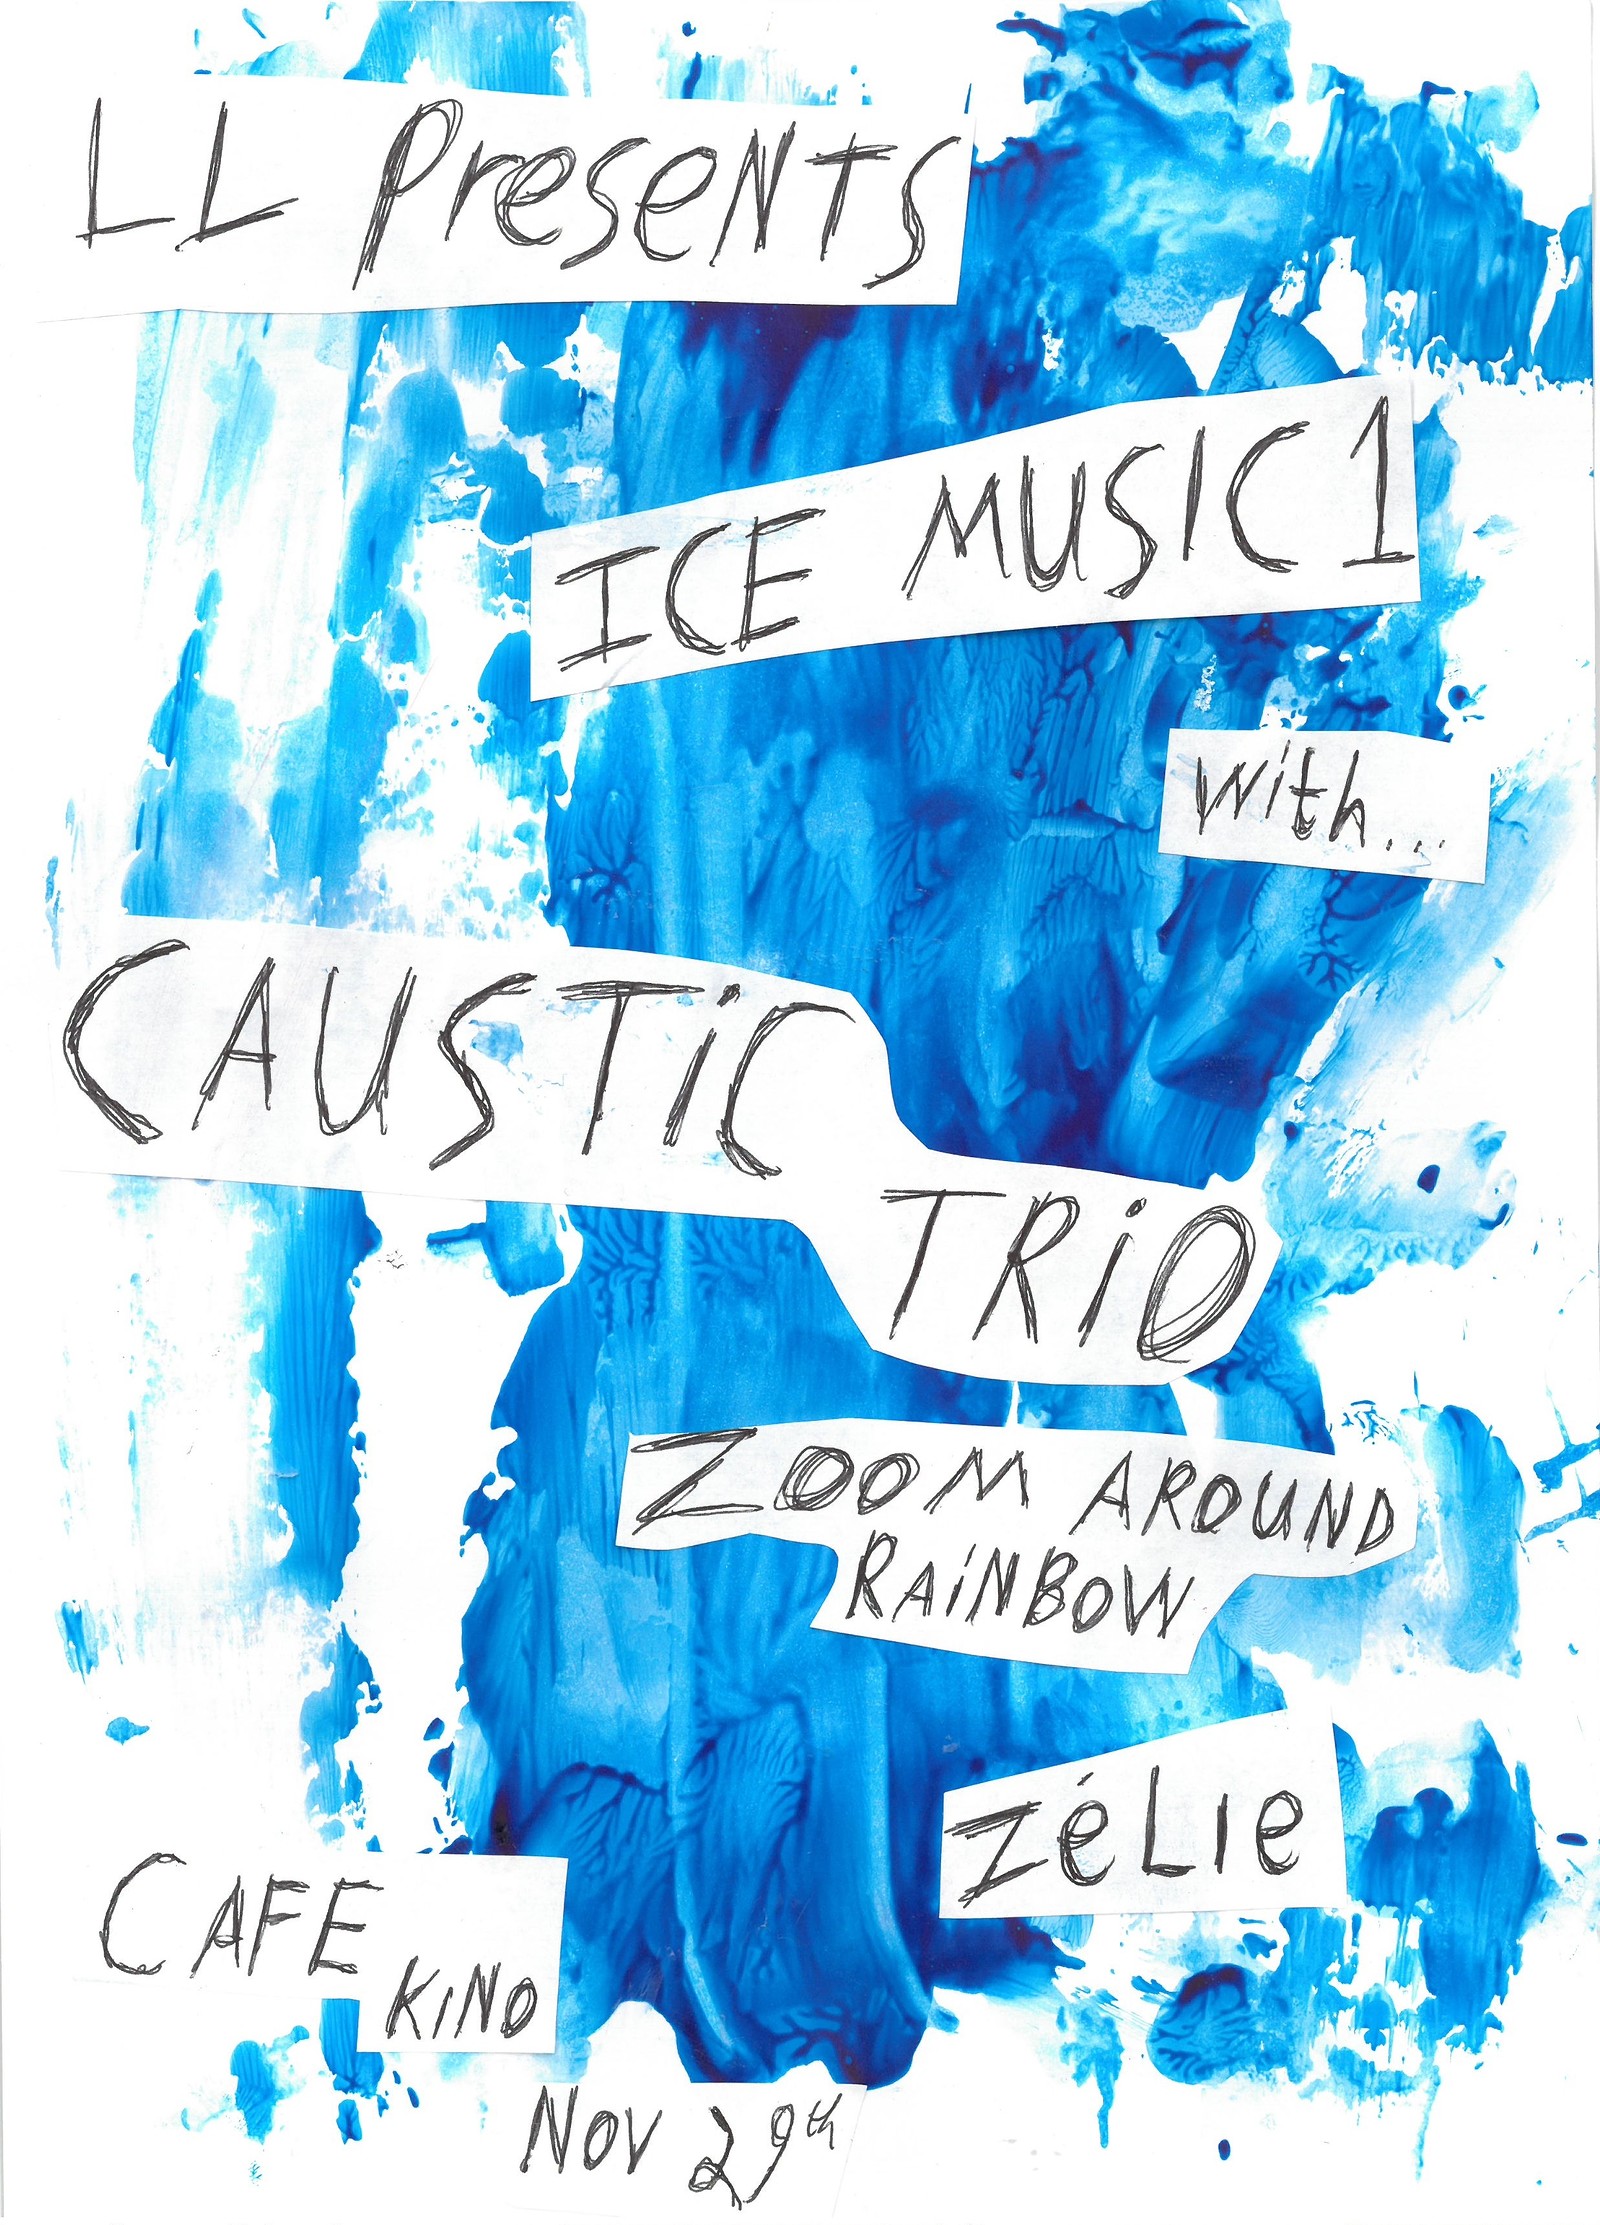 Ice Music 1 at Cafe Kino